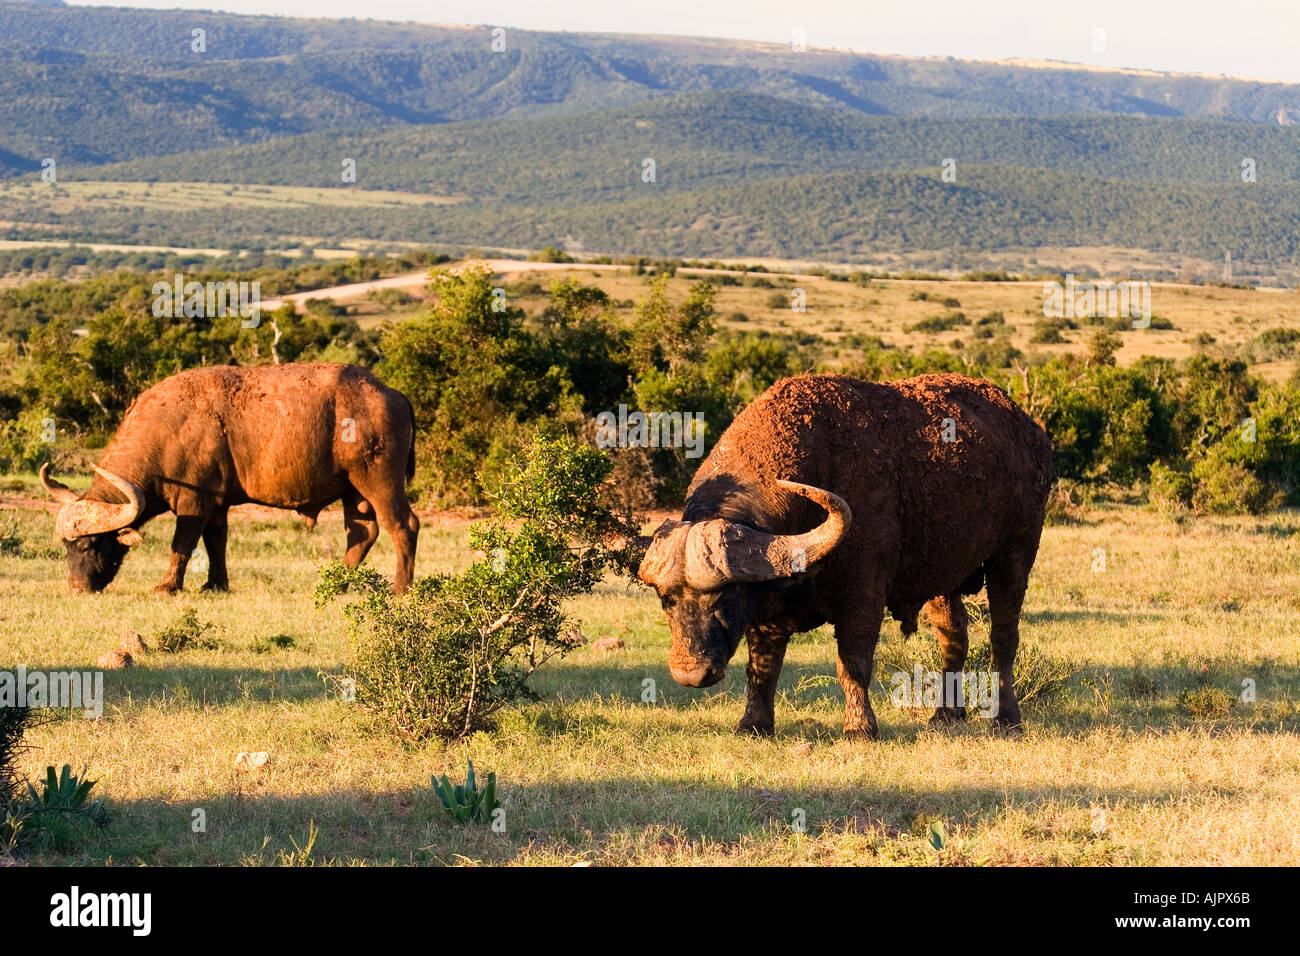 south africa Addo Elephant National Park buffalos grazing Stock Photo